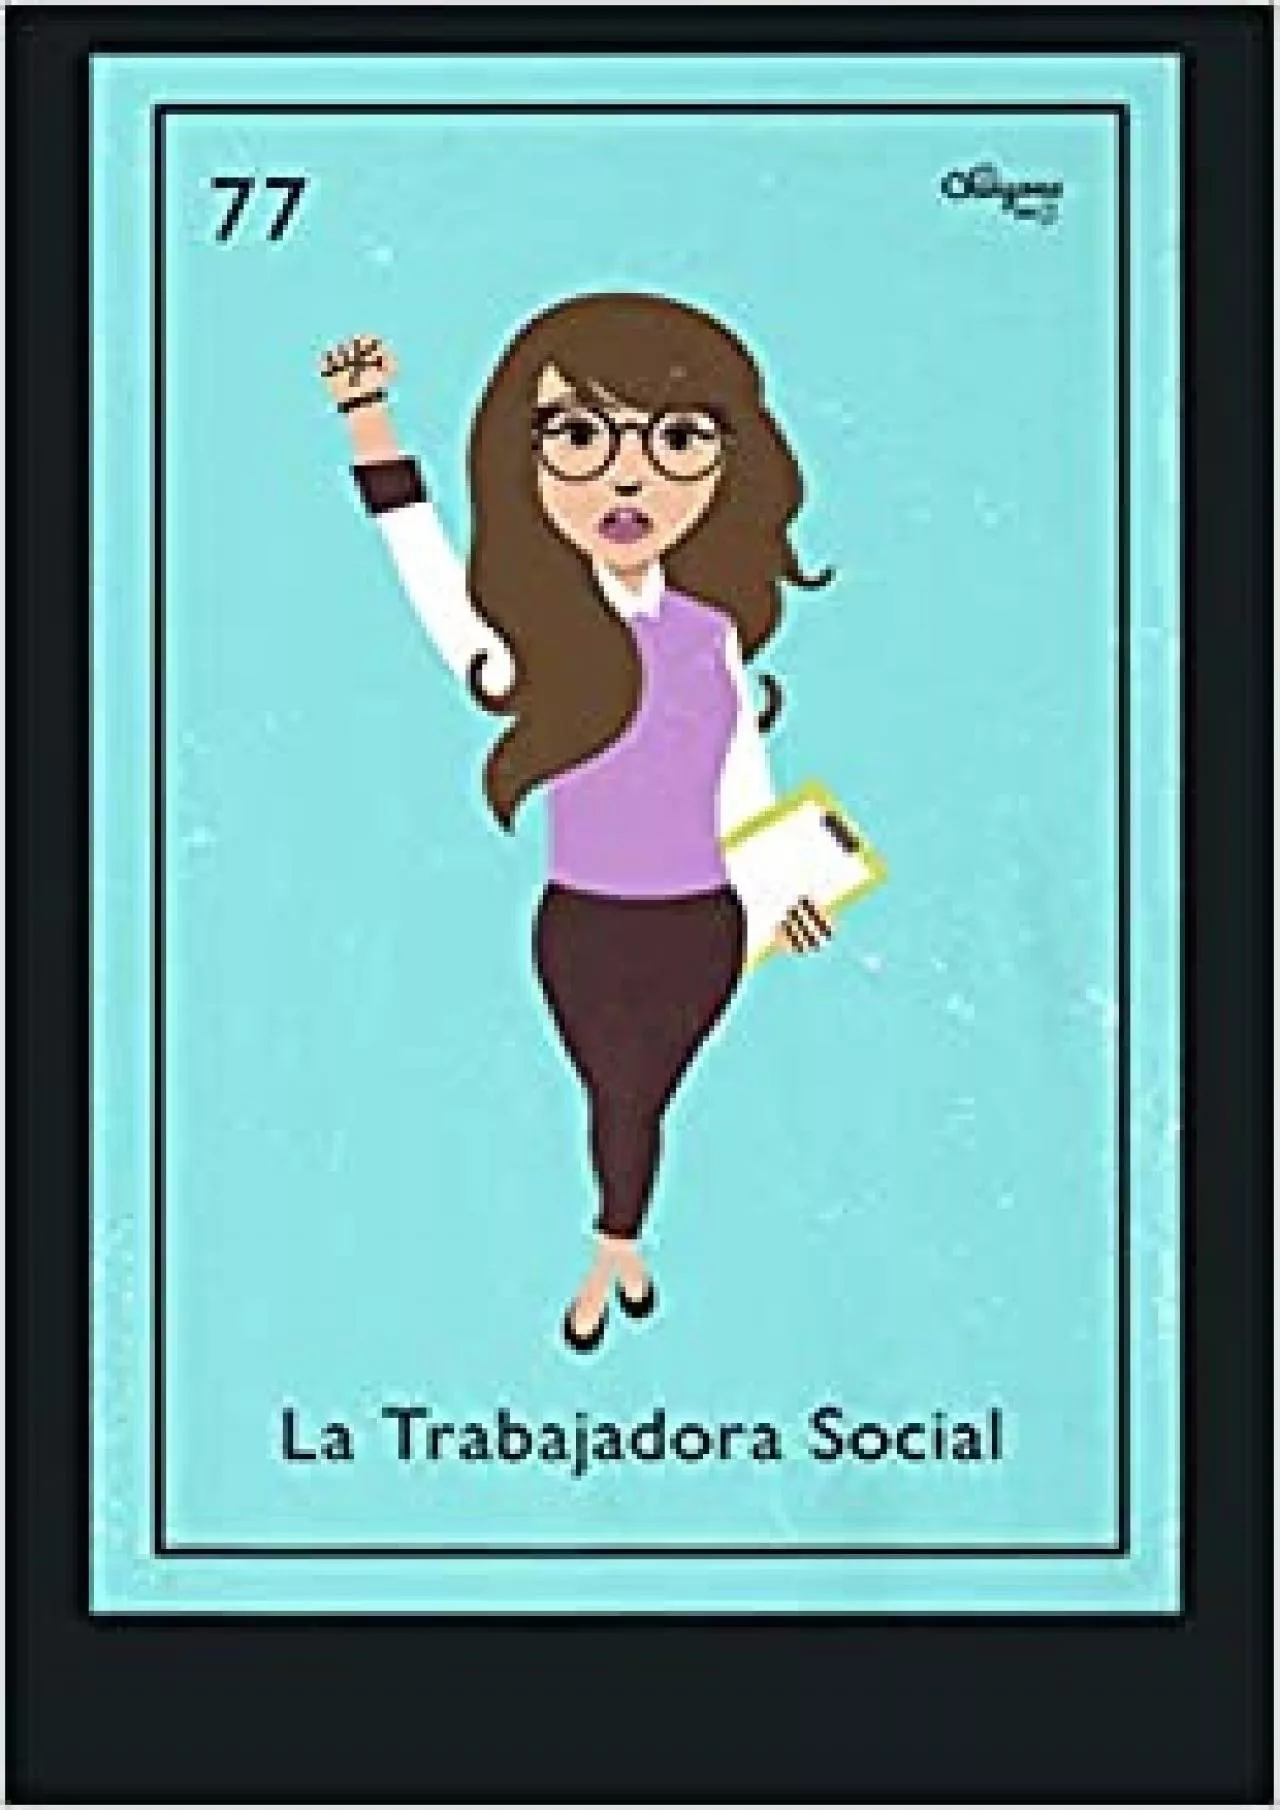 La Trabajadora Social: Notebook Planner - 6x9 inch Daily Planner Journal To Do List Notebook